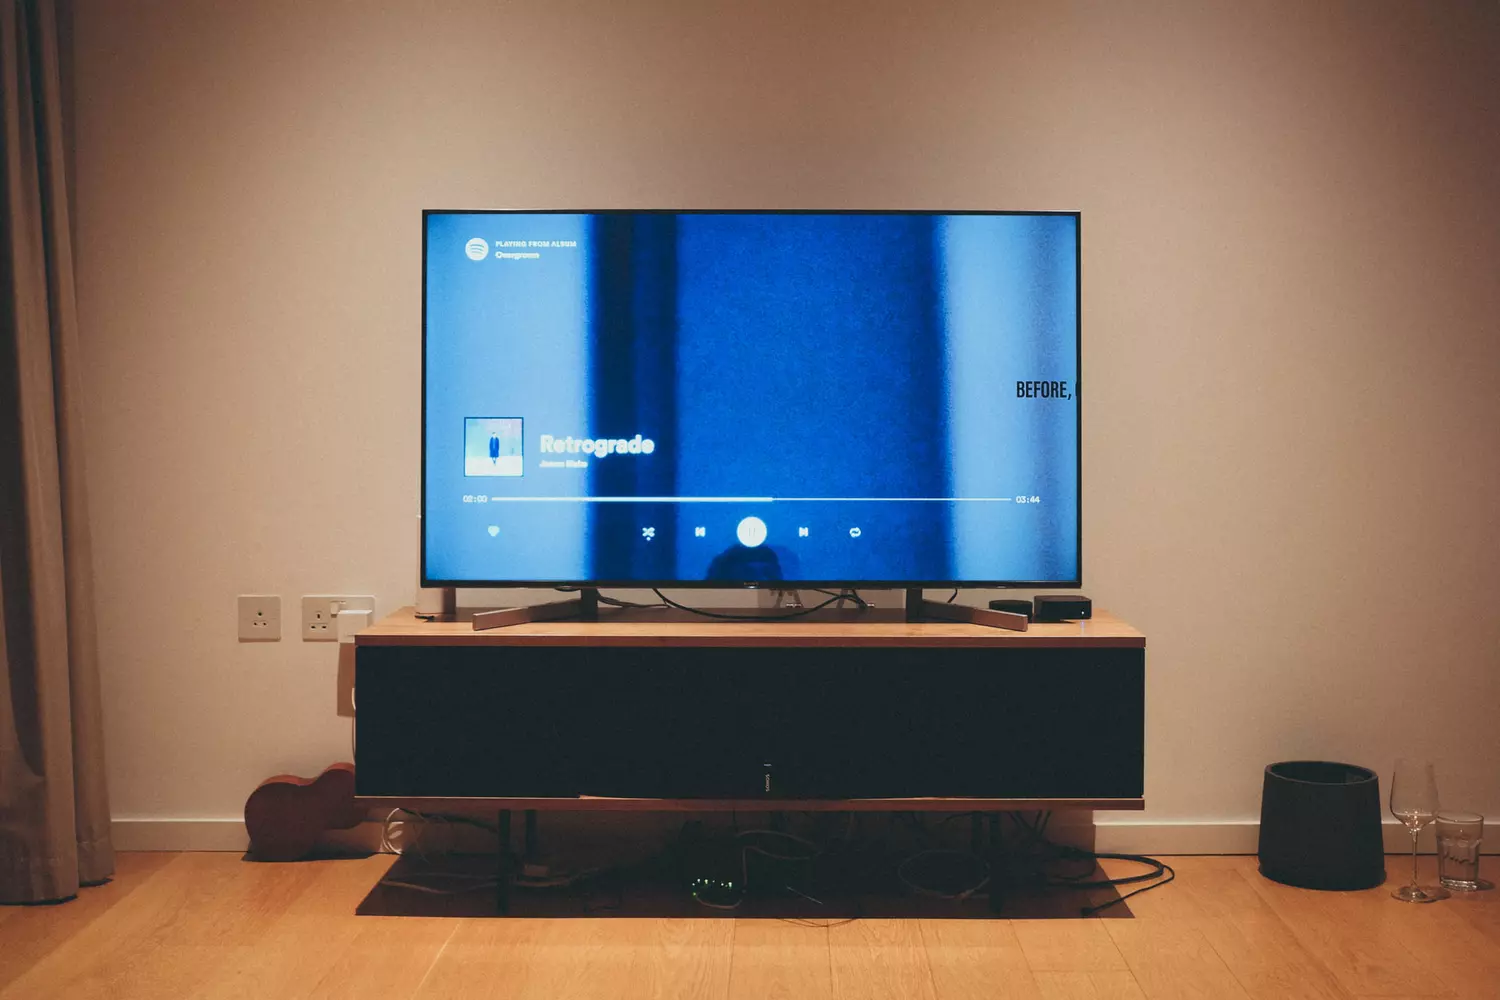 How To Turn On Subtitles On LG Smart TV